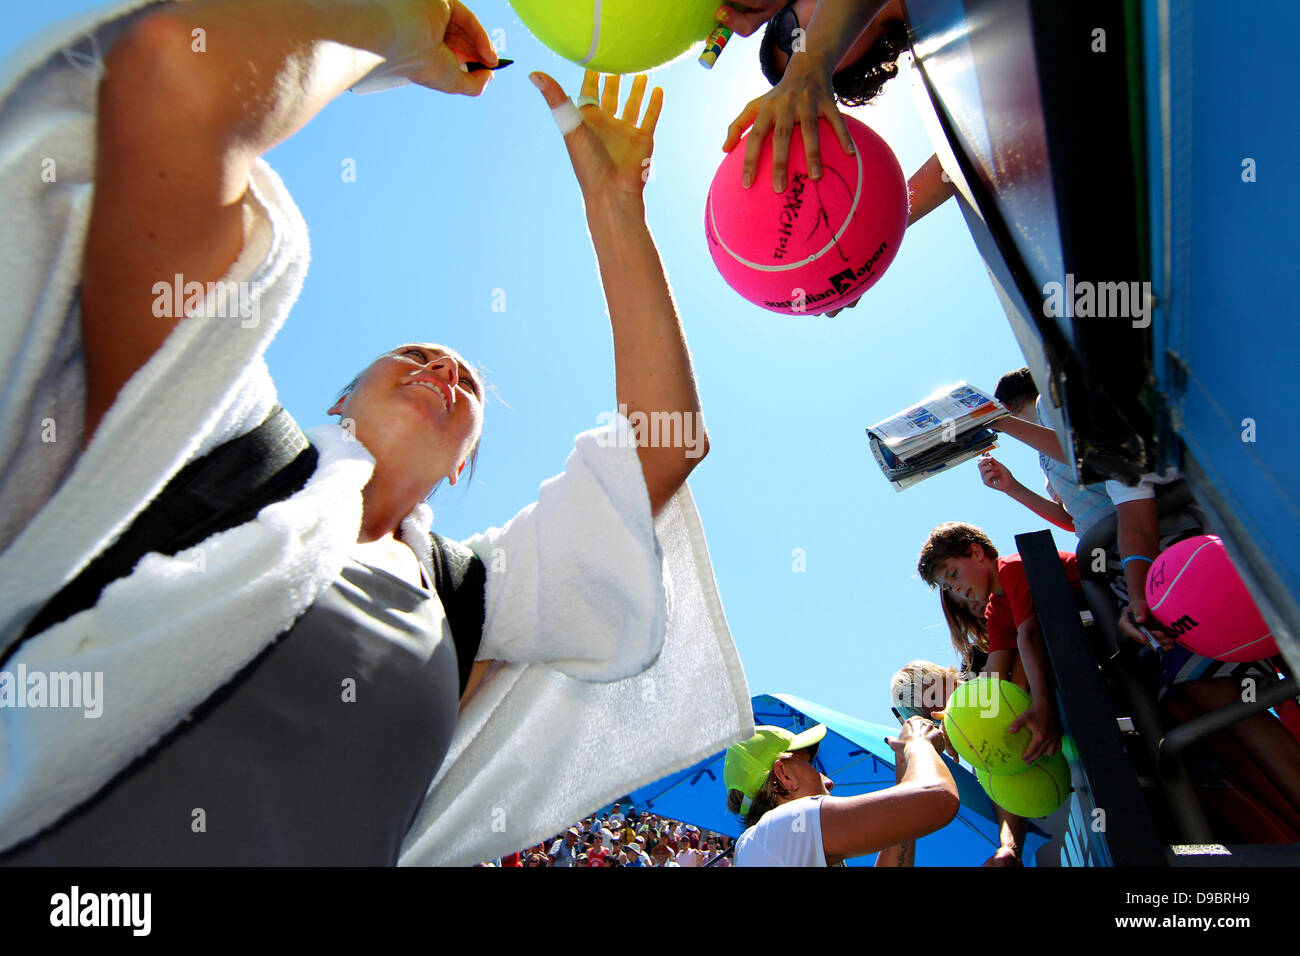 Sara Errani und Roberta Vinci Australian Open 2012 - Damen Doppel-Trophy - Svetlana Kuznetsova und Vera Zvonareva vs. Sara Errani und Roberta Vinci Melbourne, Australien - 27.01.12 *** Stockfoto